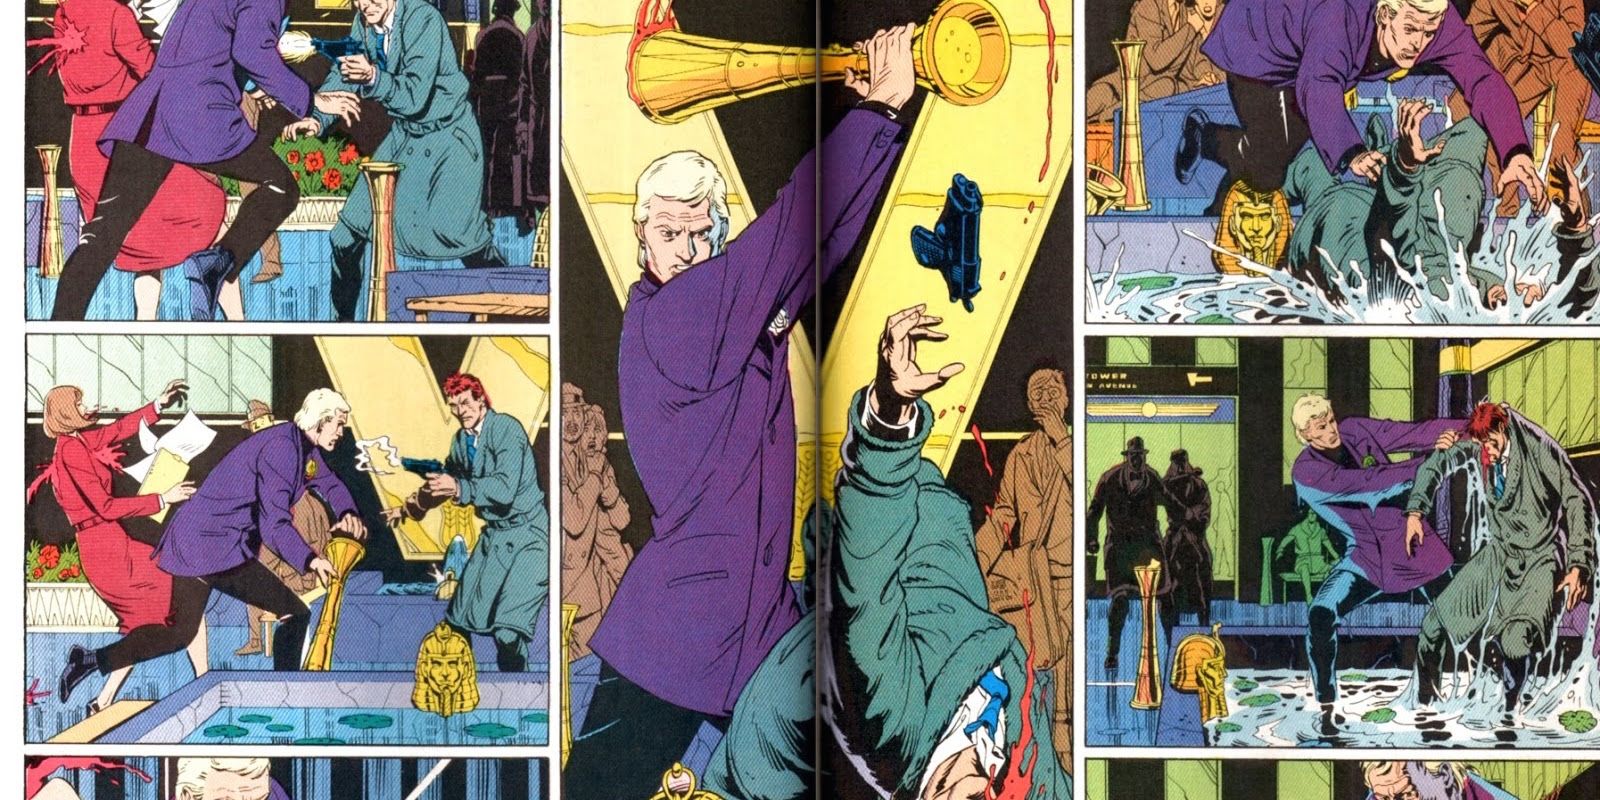 Ozymandias kills assassin in the Watchmen comic